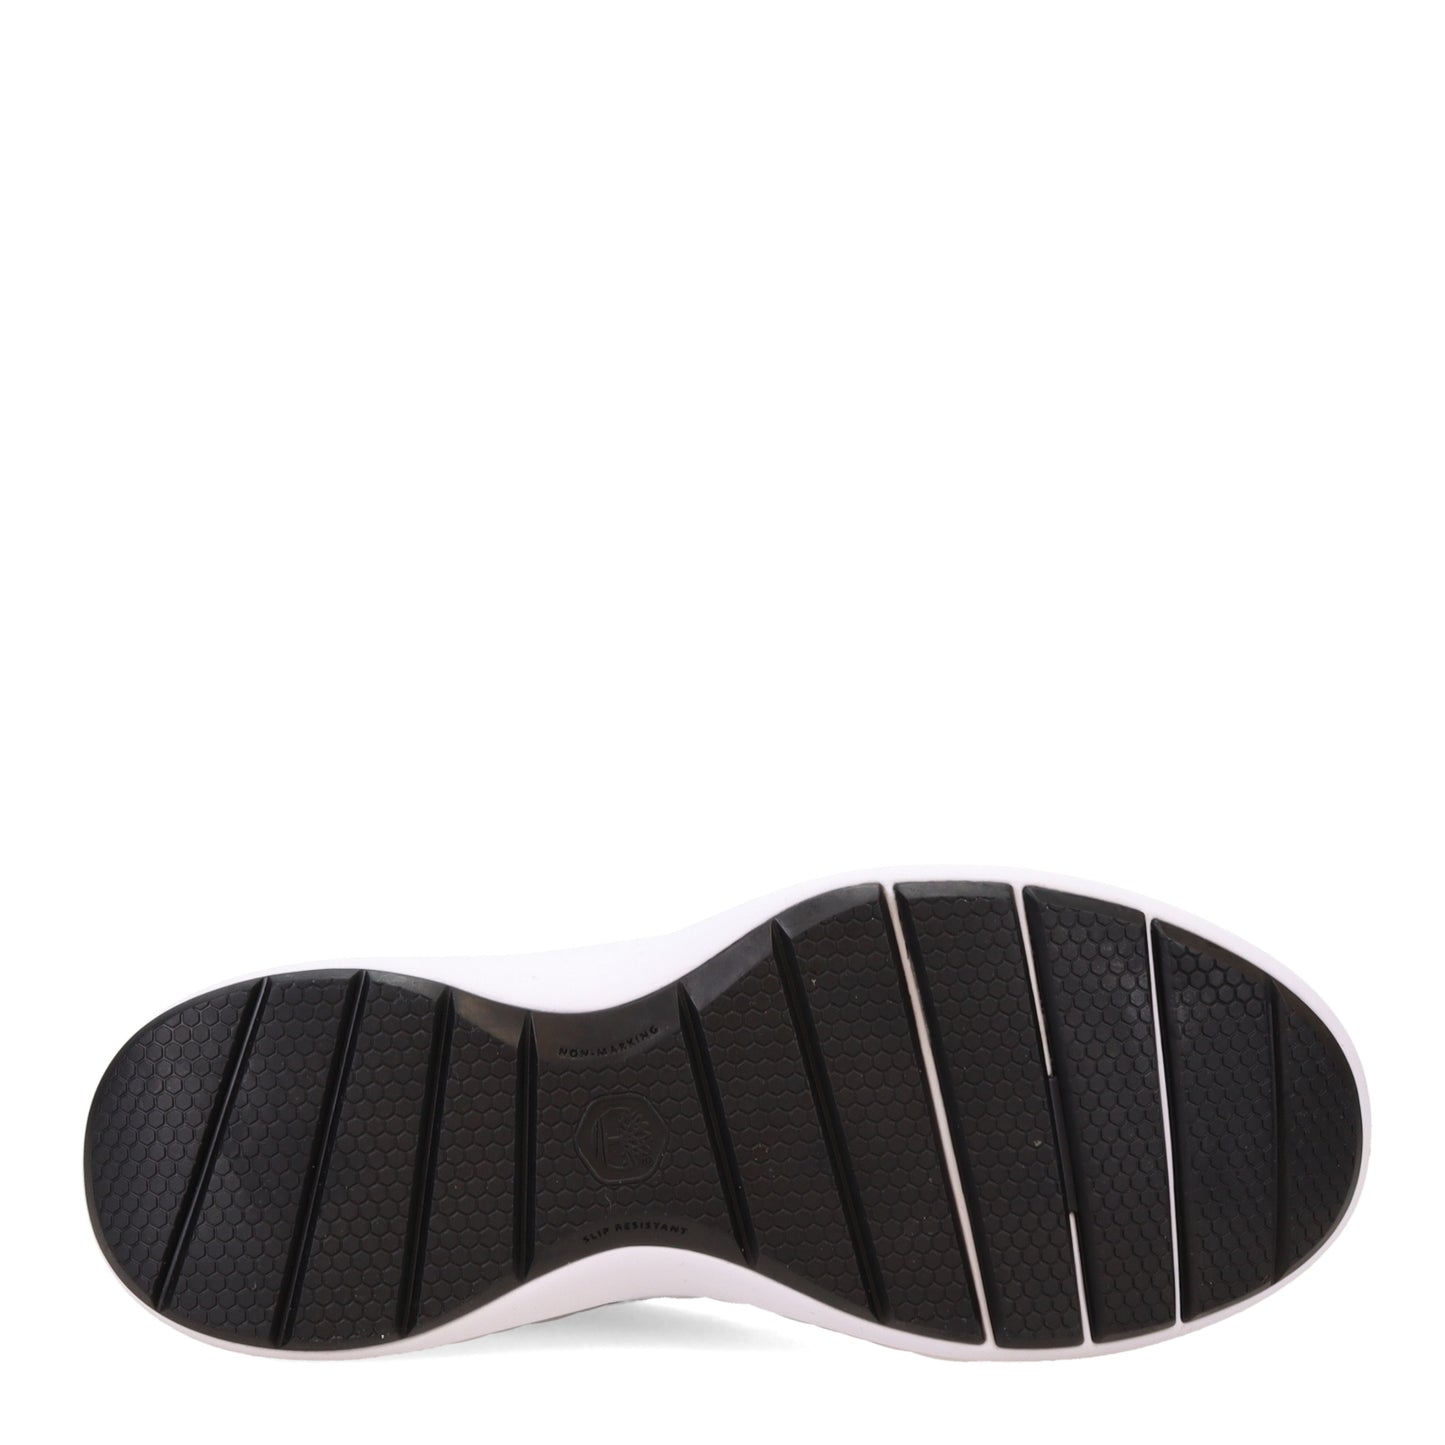 Peltz Shoes  Men's Timberland Pro Solace Work Shoe Black White TB0A5WG3001